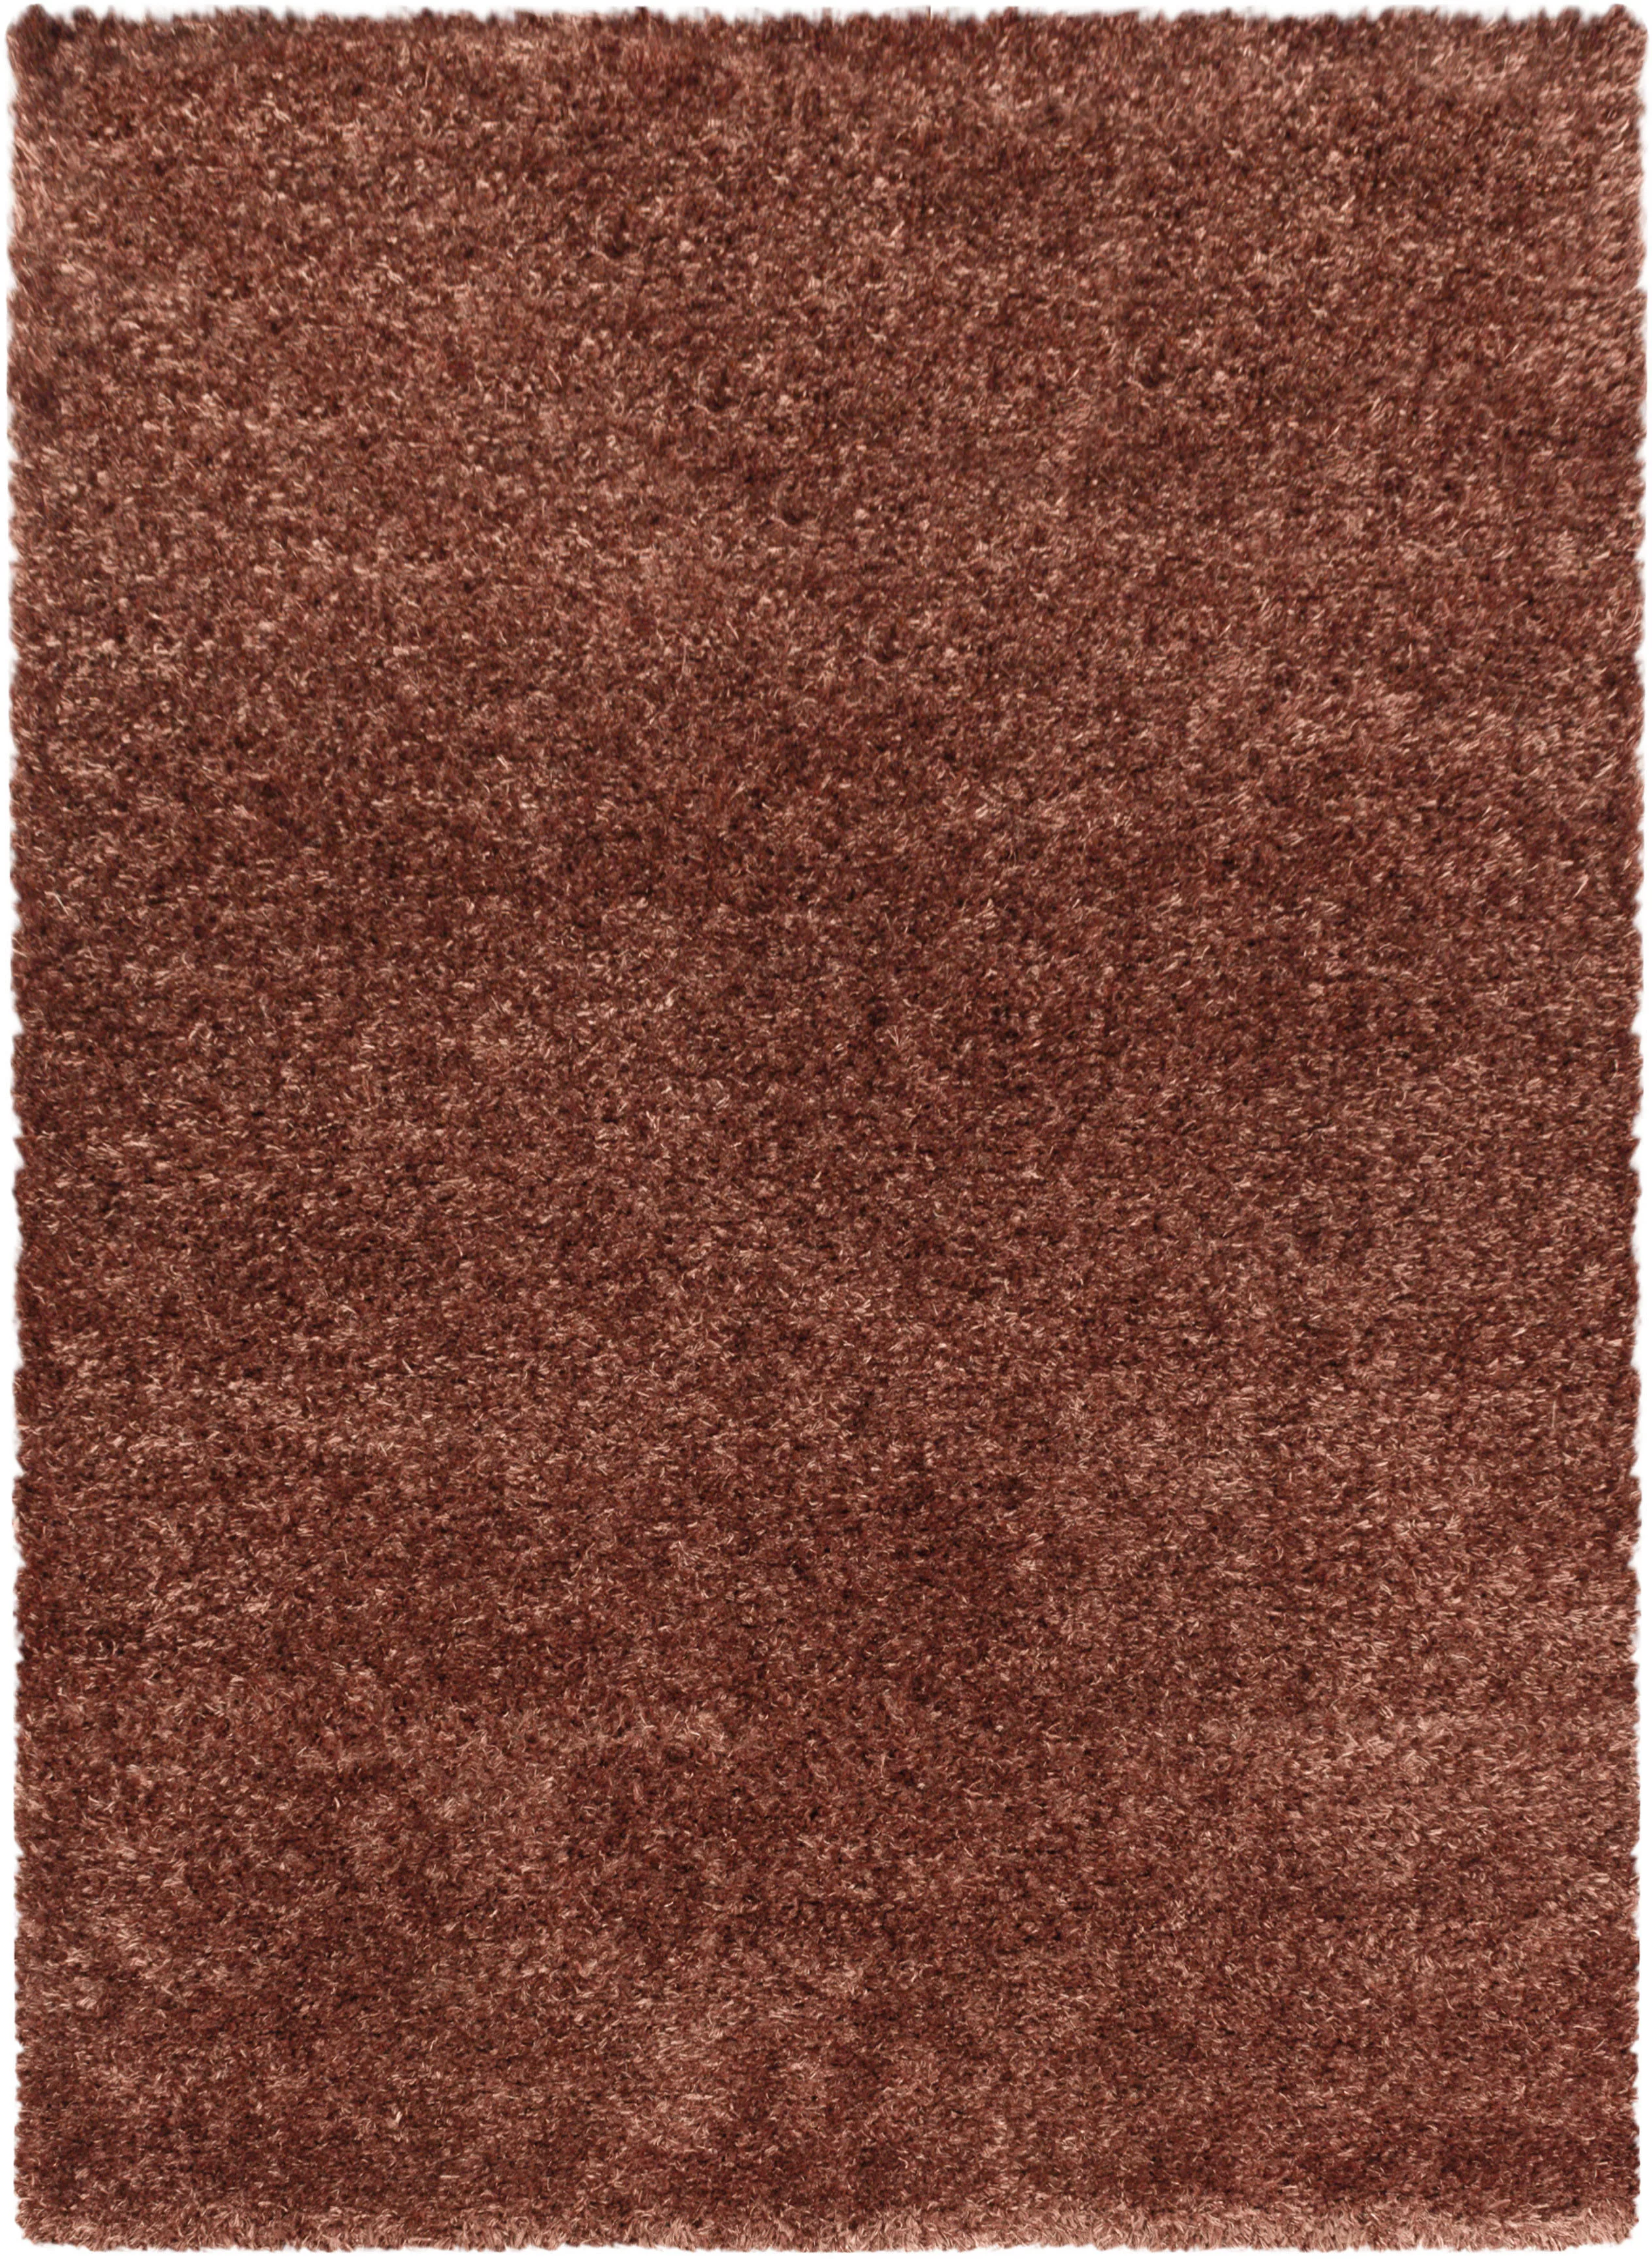 Ayyildiz Teppich BRILLIANT weiß B/L: ca. 120x170 cm günstig online kaufen